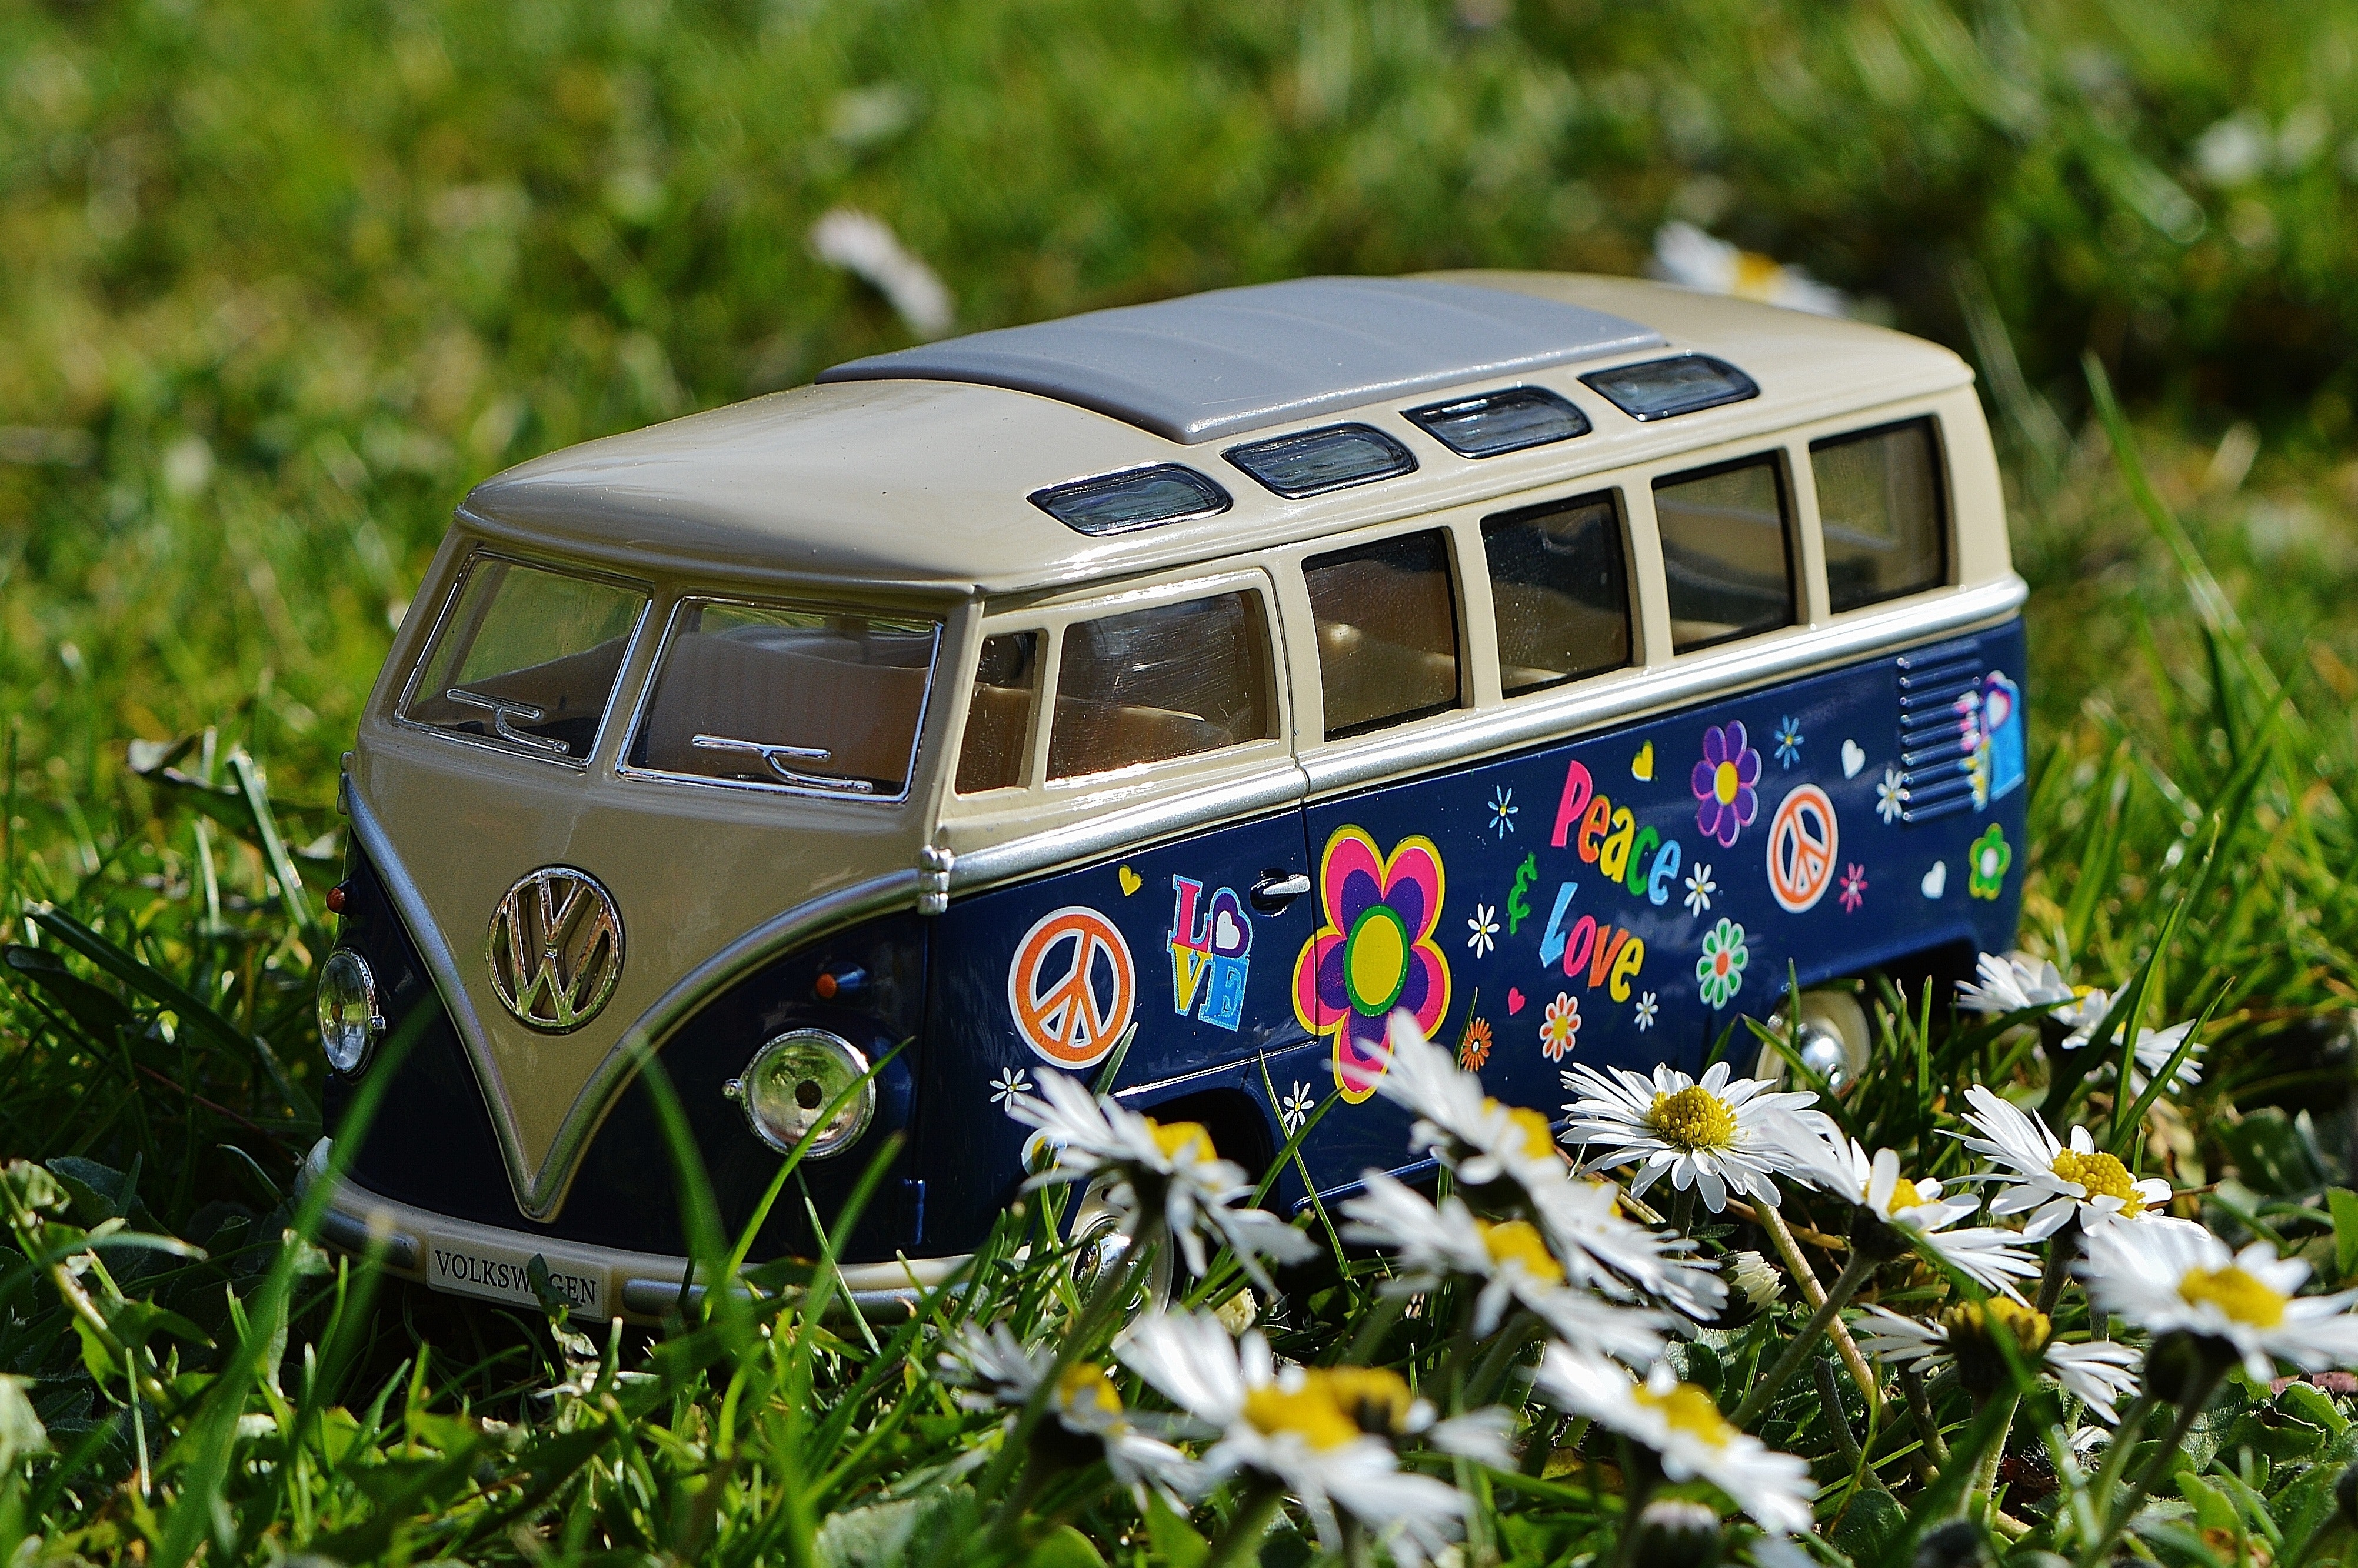 Volkswagen beige and blue van scale model near white daisy flower during daytime photo